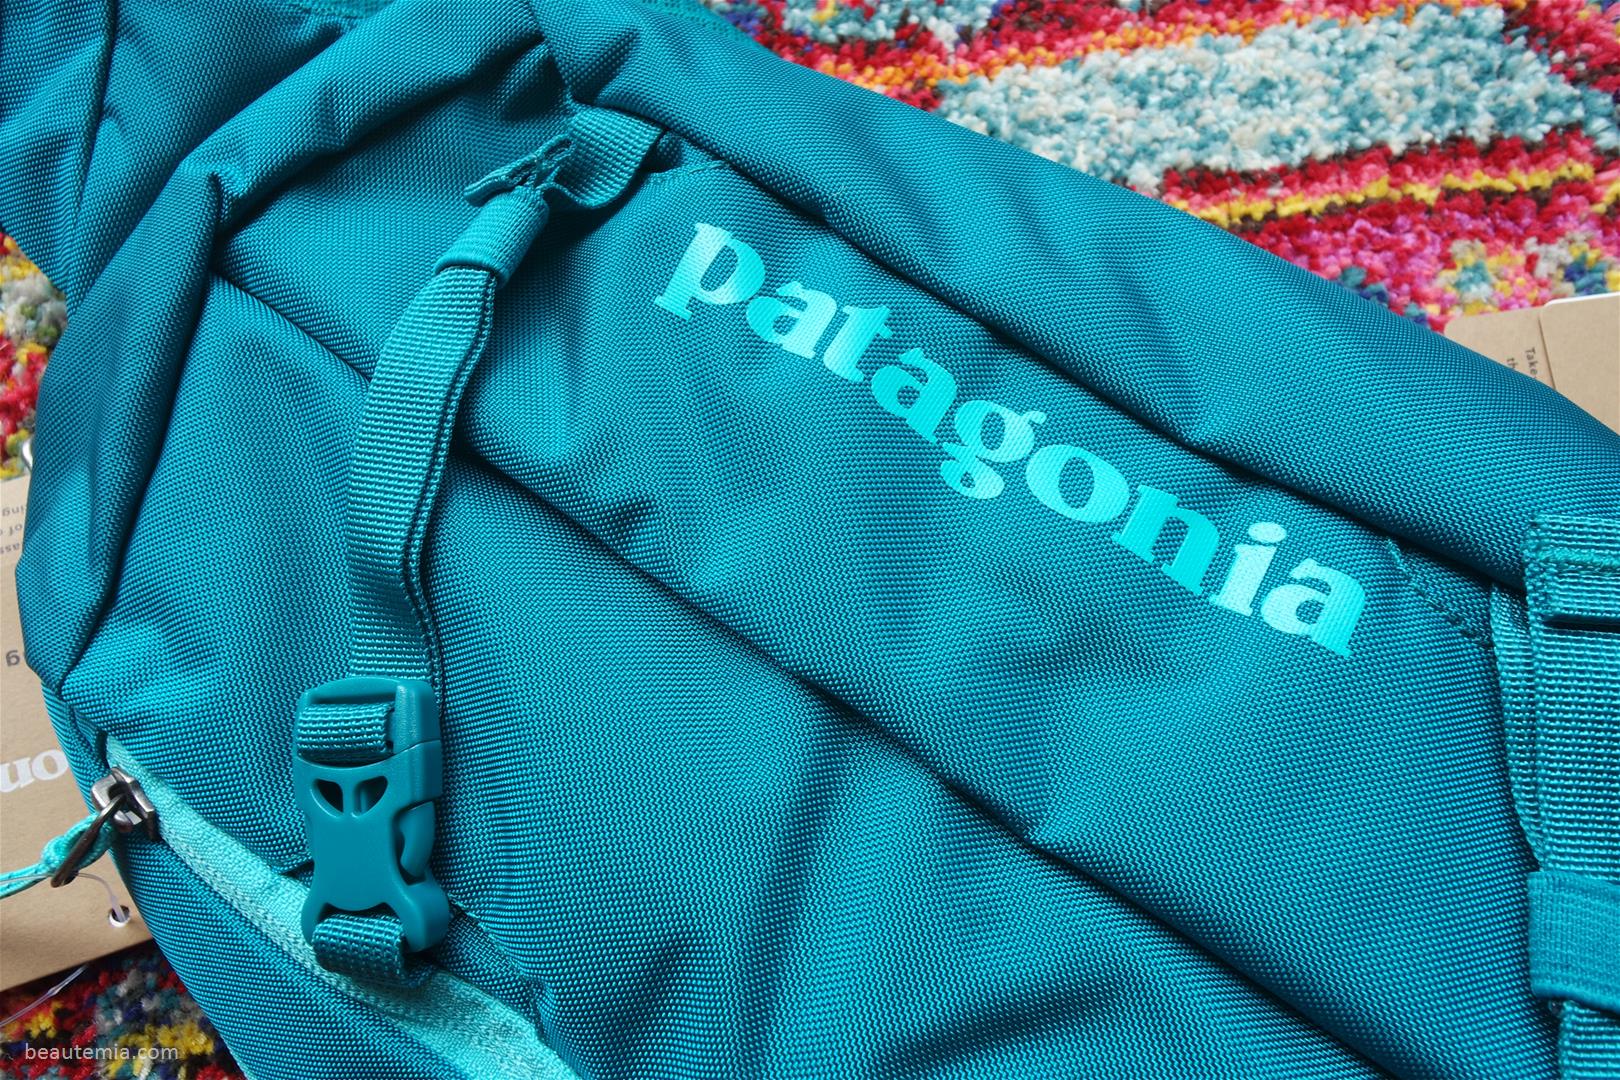 Patagonia, May Lindstrom, Kat Burki, Chantecaille, Tammy Fender, Patagonia backpack, Patagonia founder, Patagonia mission, Patagonia ski, Patagonia jacket, Patagonia coat & Patagonia review